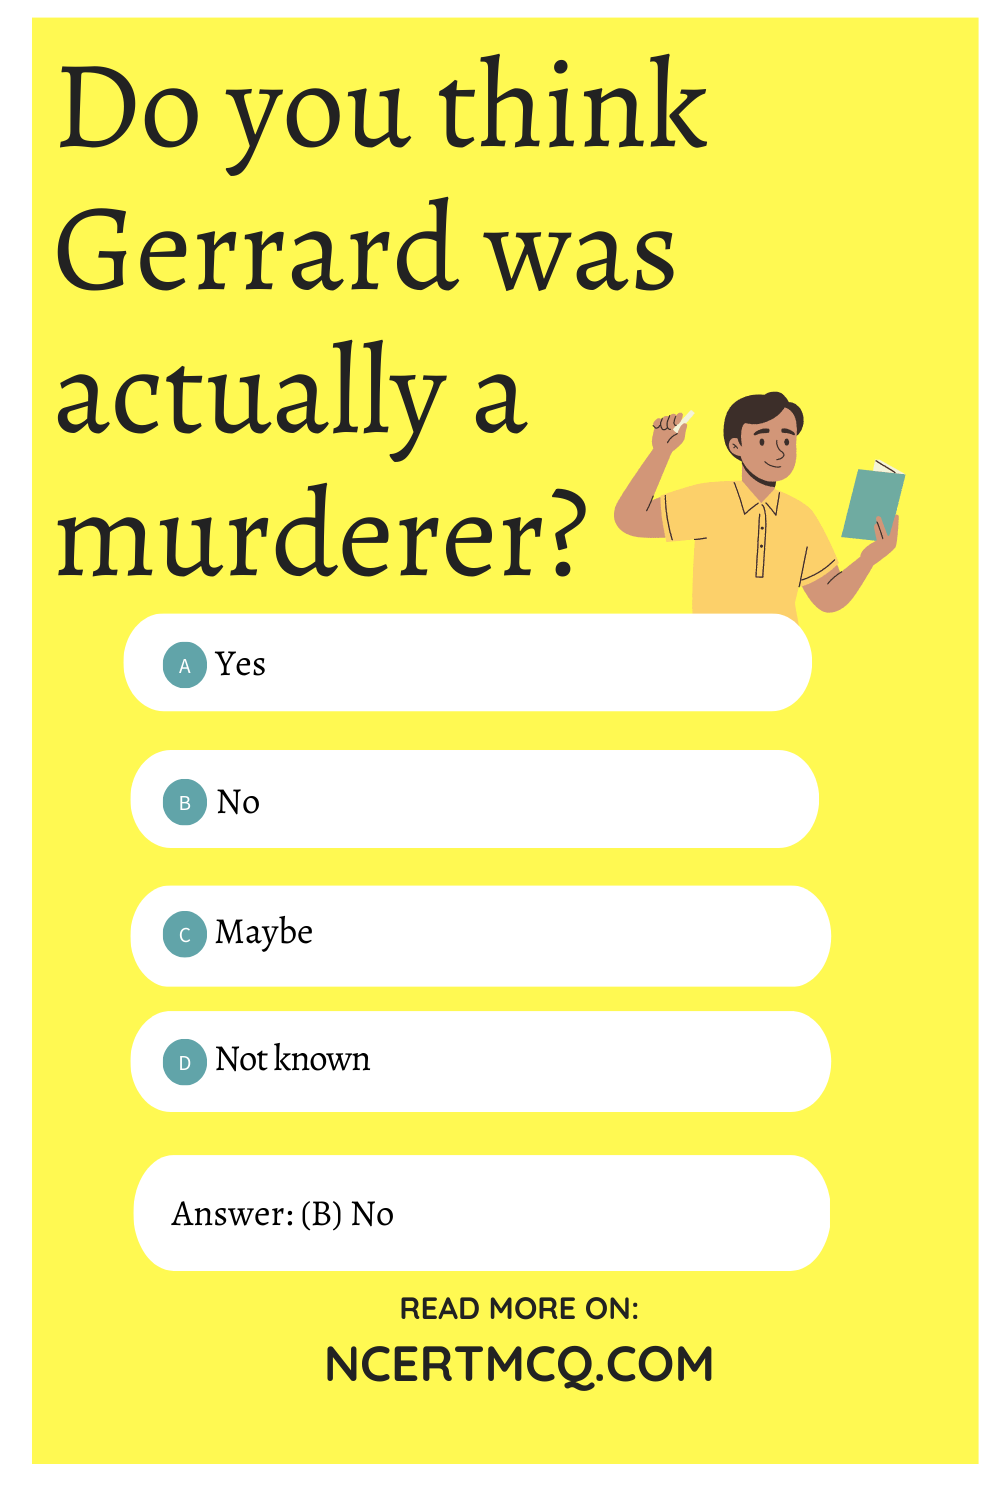 Do you think Gerrard was actually a murderer?